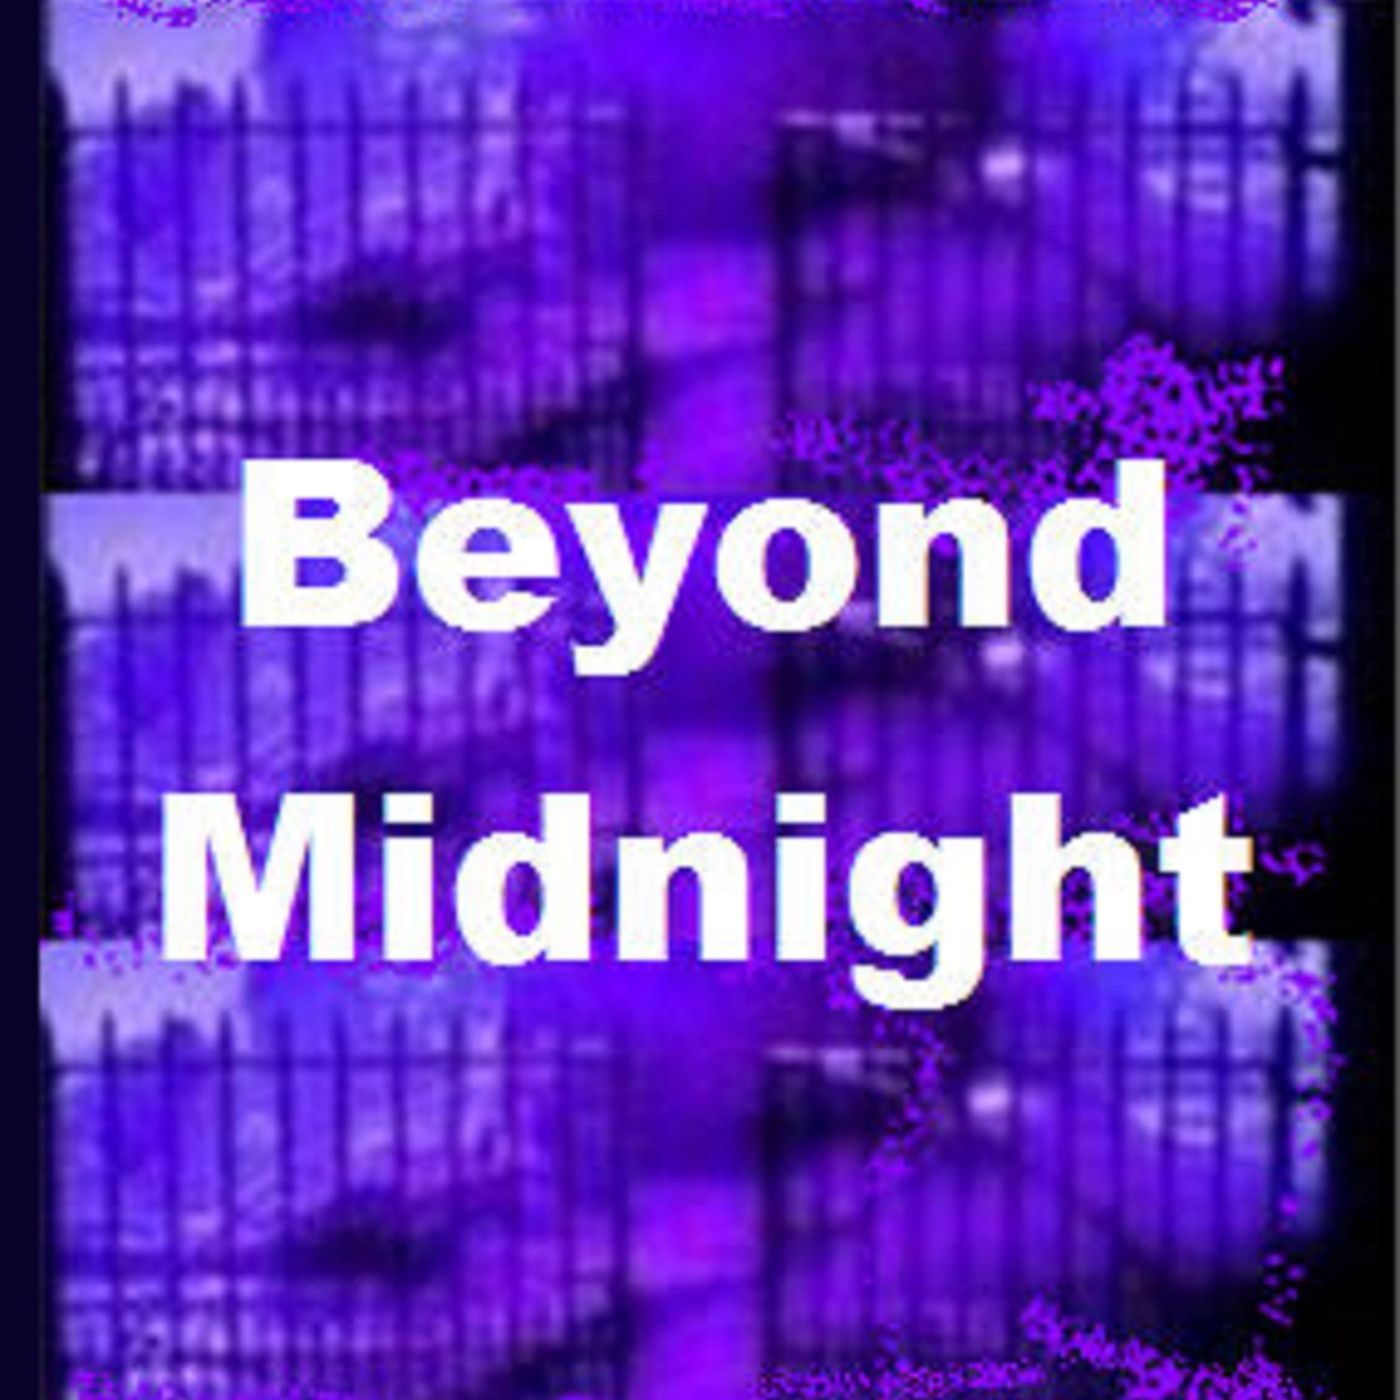 Beyond Midnight 1968-xx-xx (19) The Happy Return